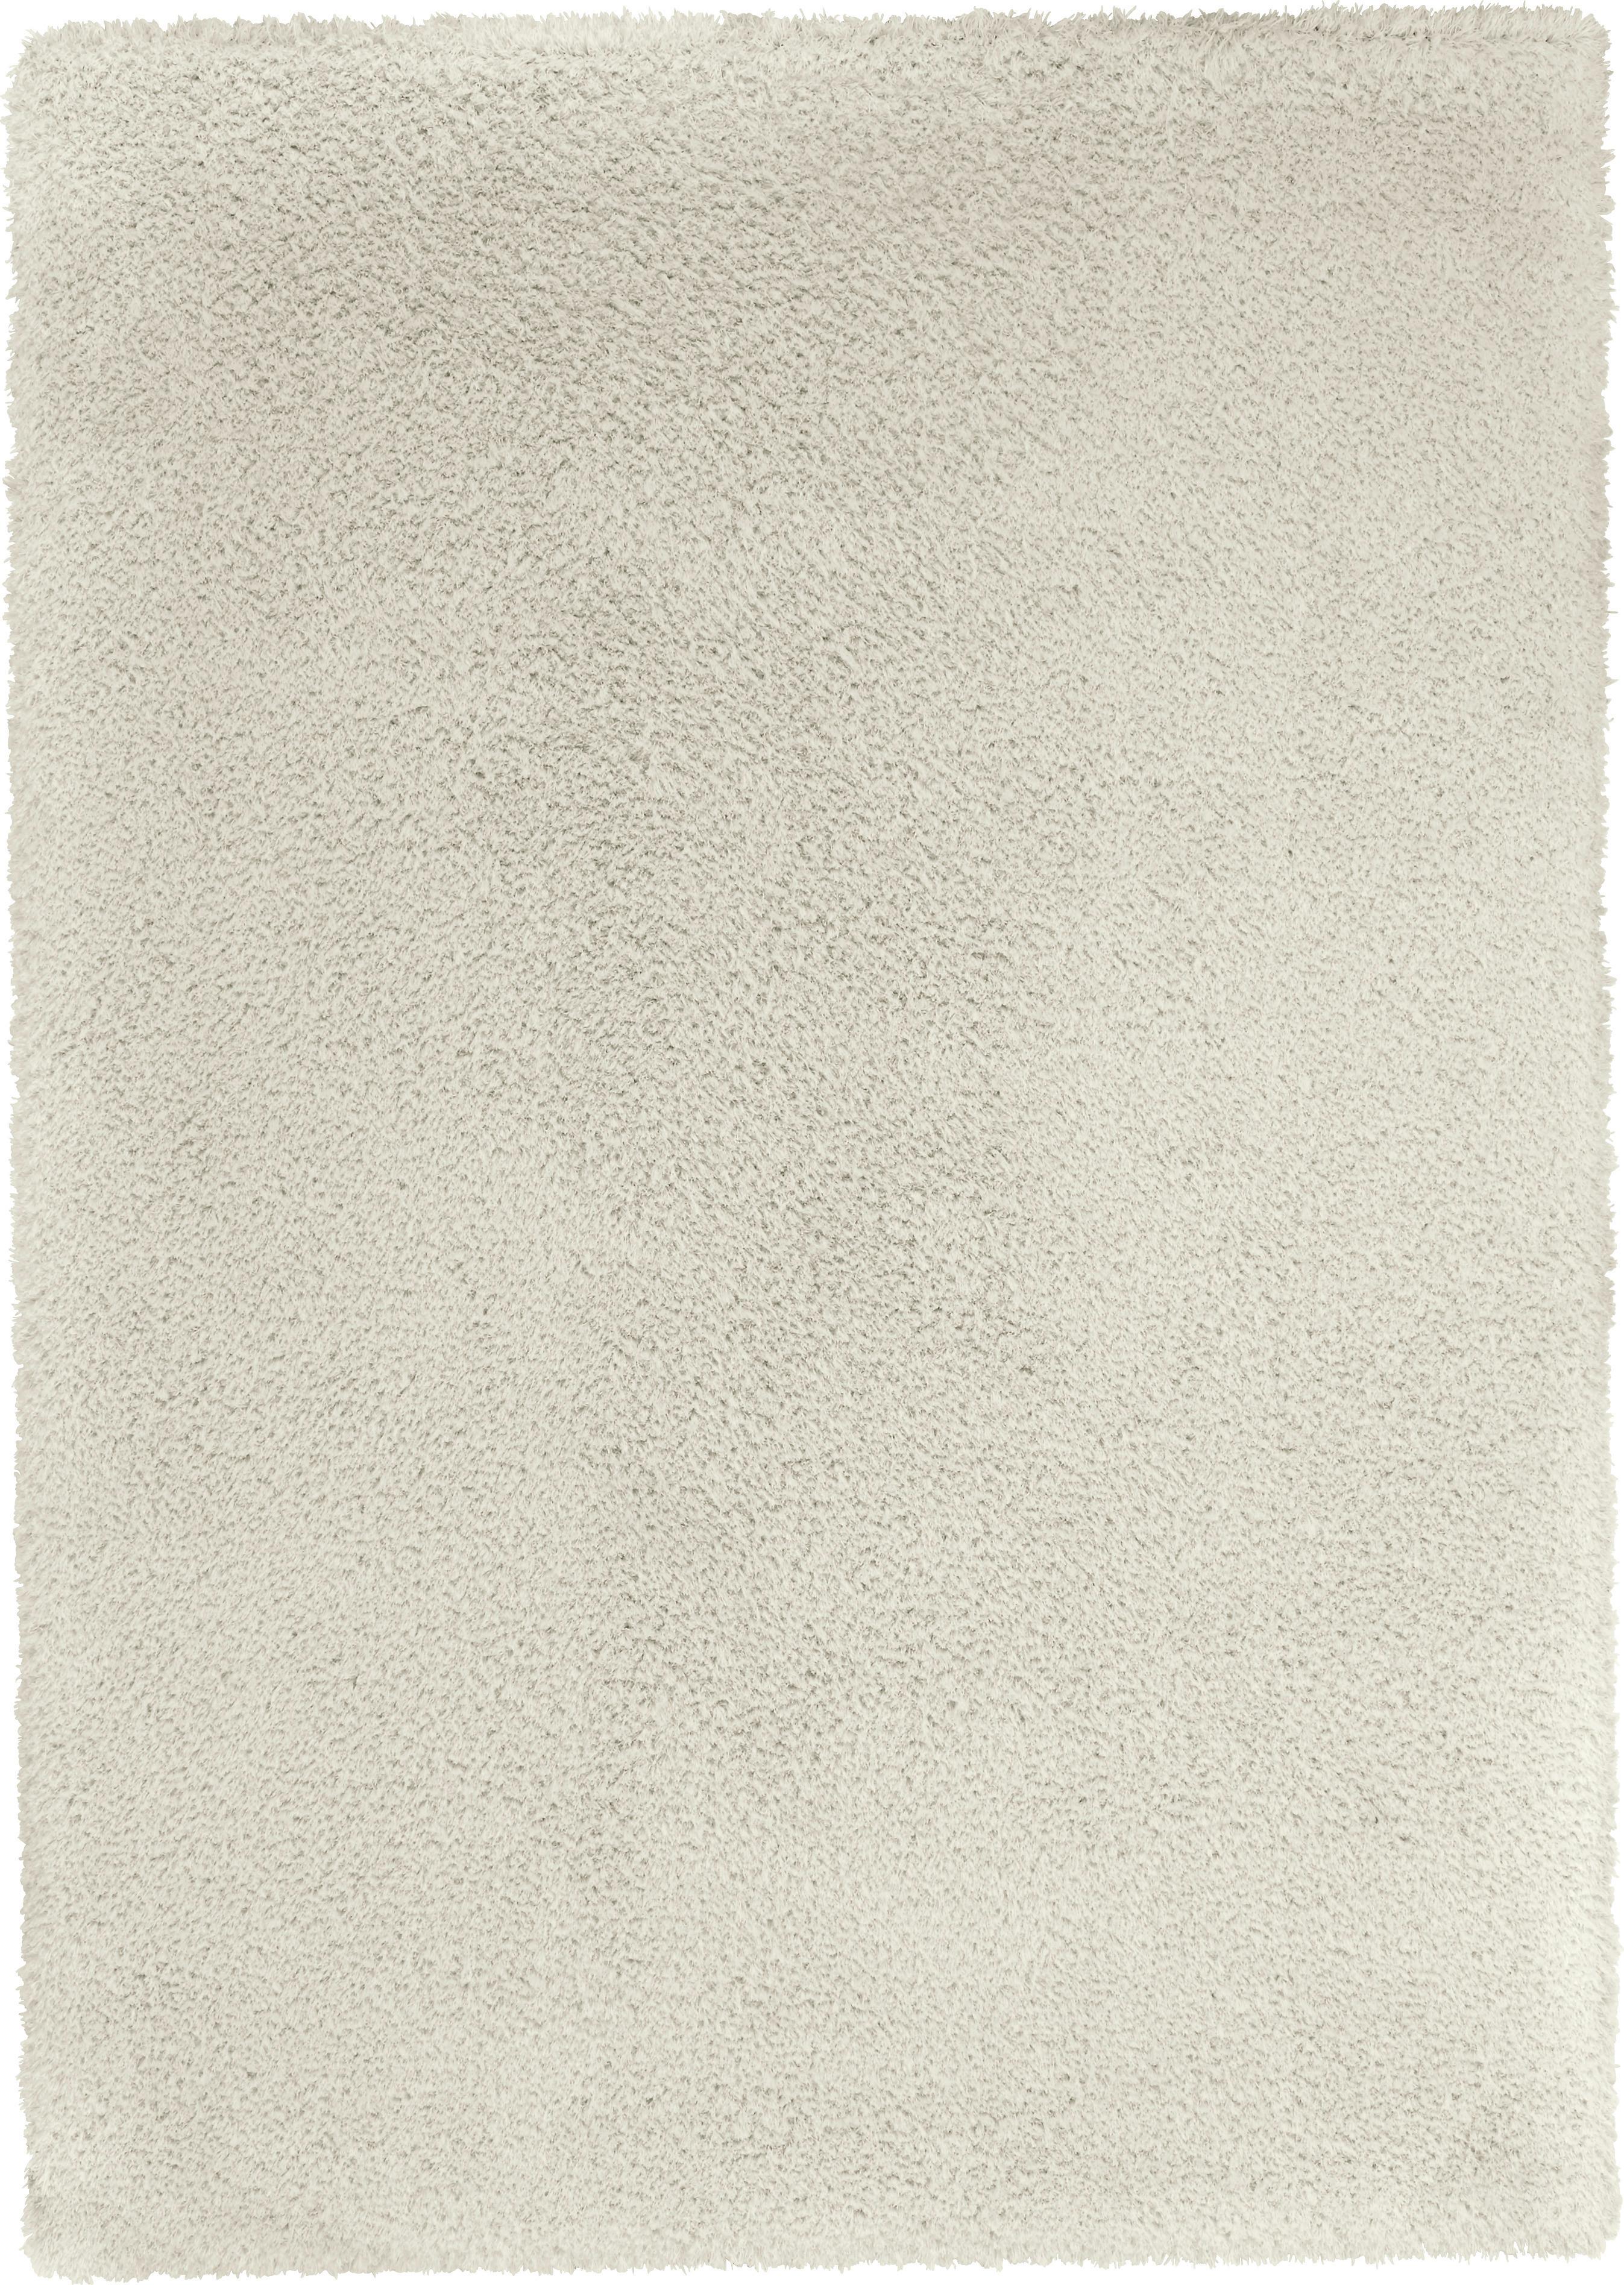 Shaggy Stefan in Weiß ca. 120x170cm - Weiß, MODERN, Textil (120/170cm) - Modern Living